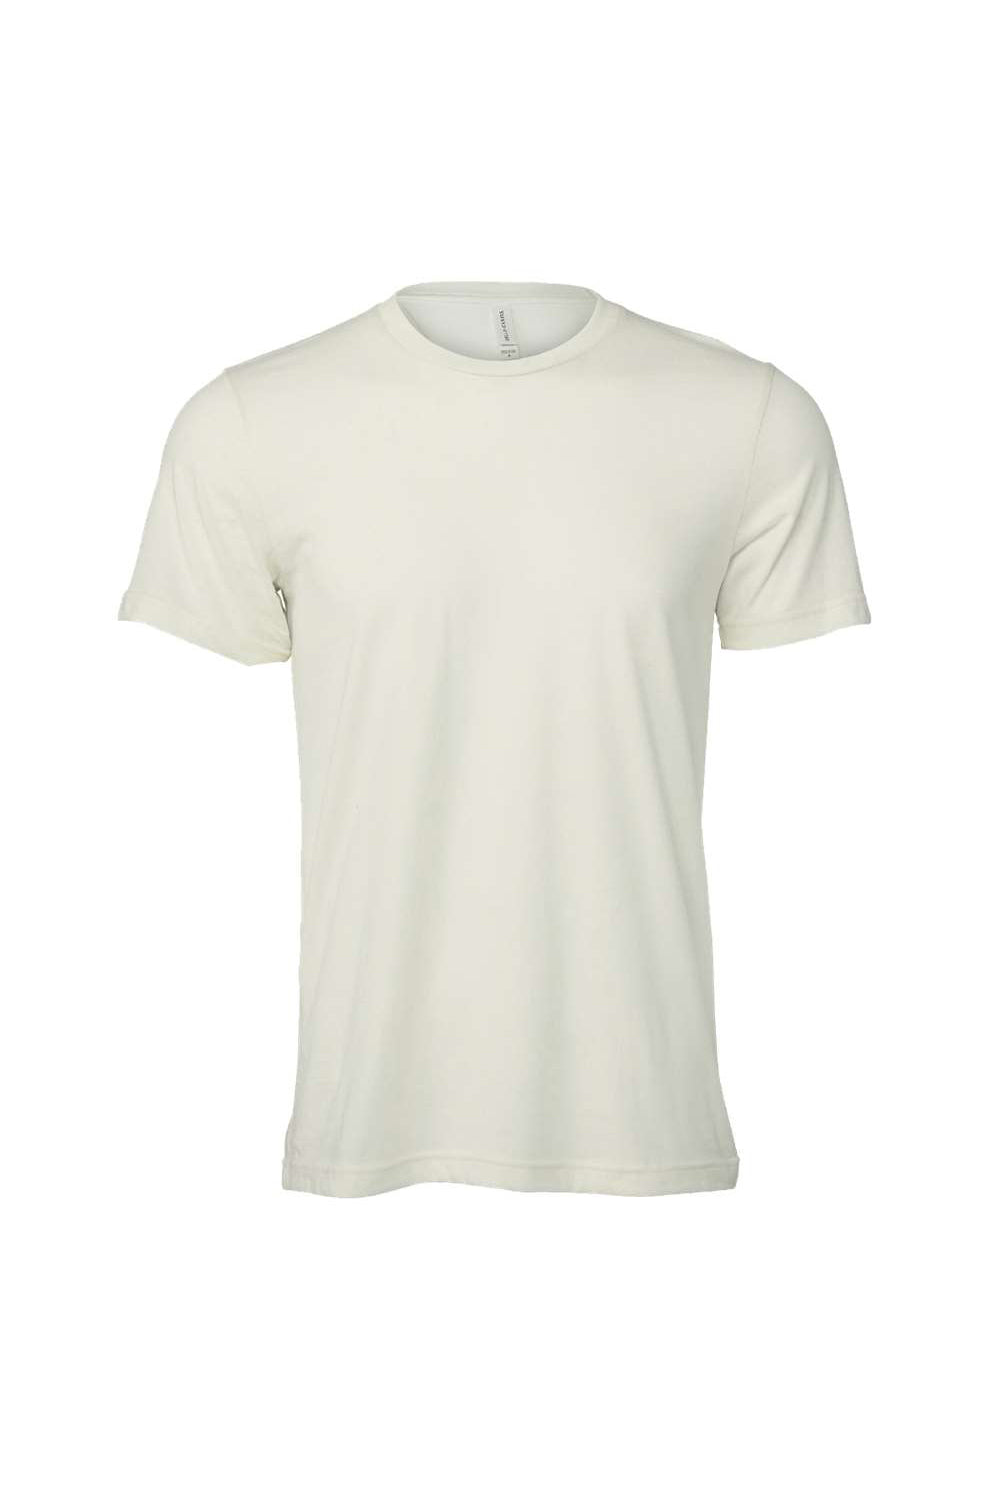 Bella + Canvas BC3001/3001C Mens Jersey Short Sleeve Crewneck T-Shirt Citron Flat Front